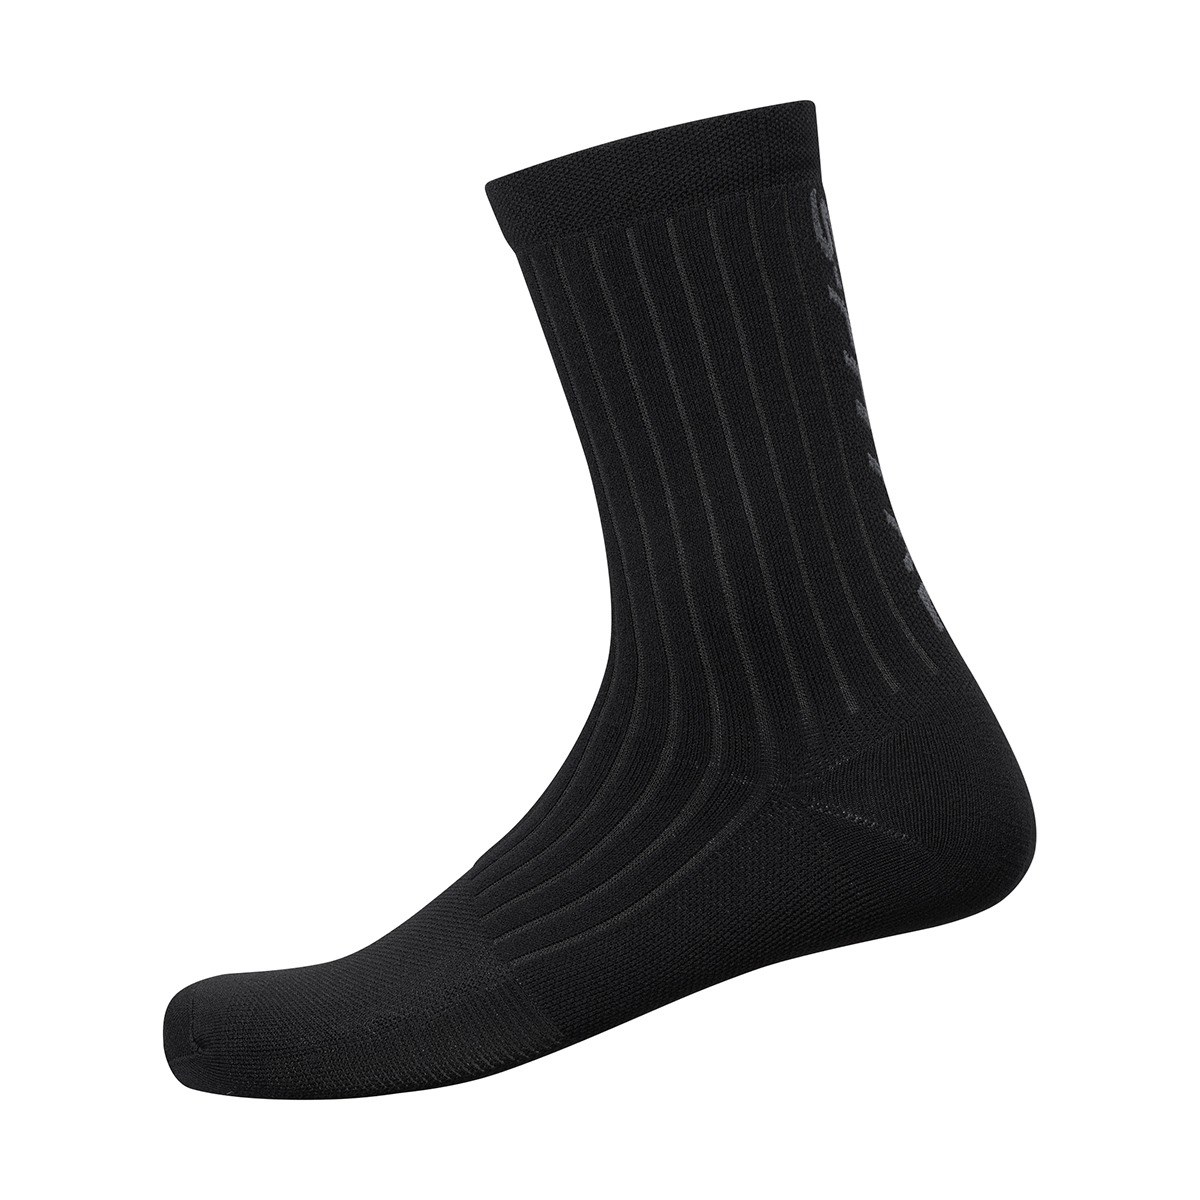 Heat socks 6.1 toe cap merino compression